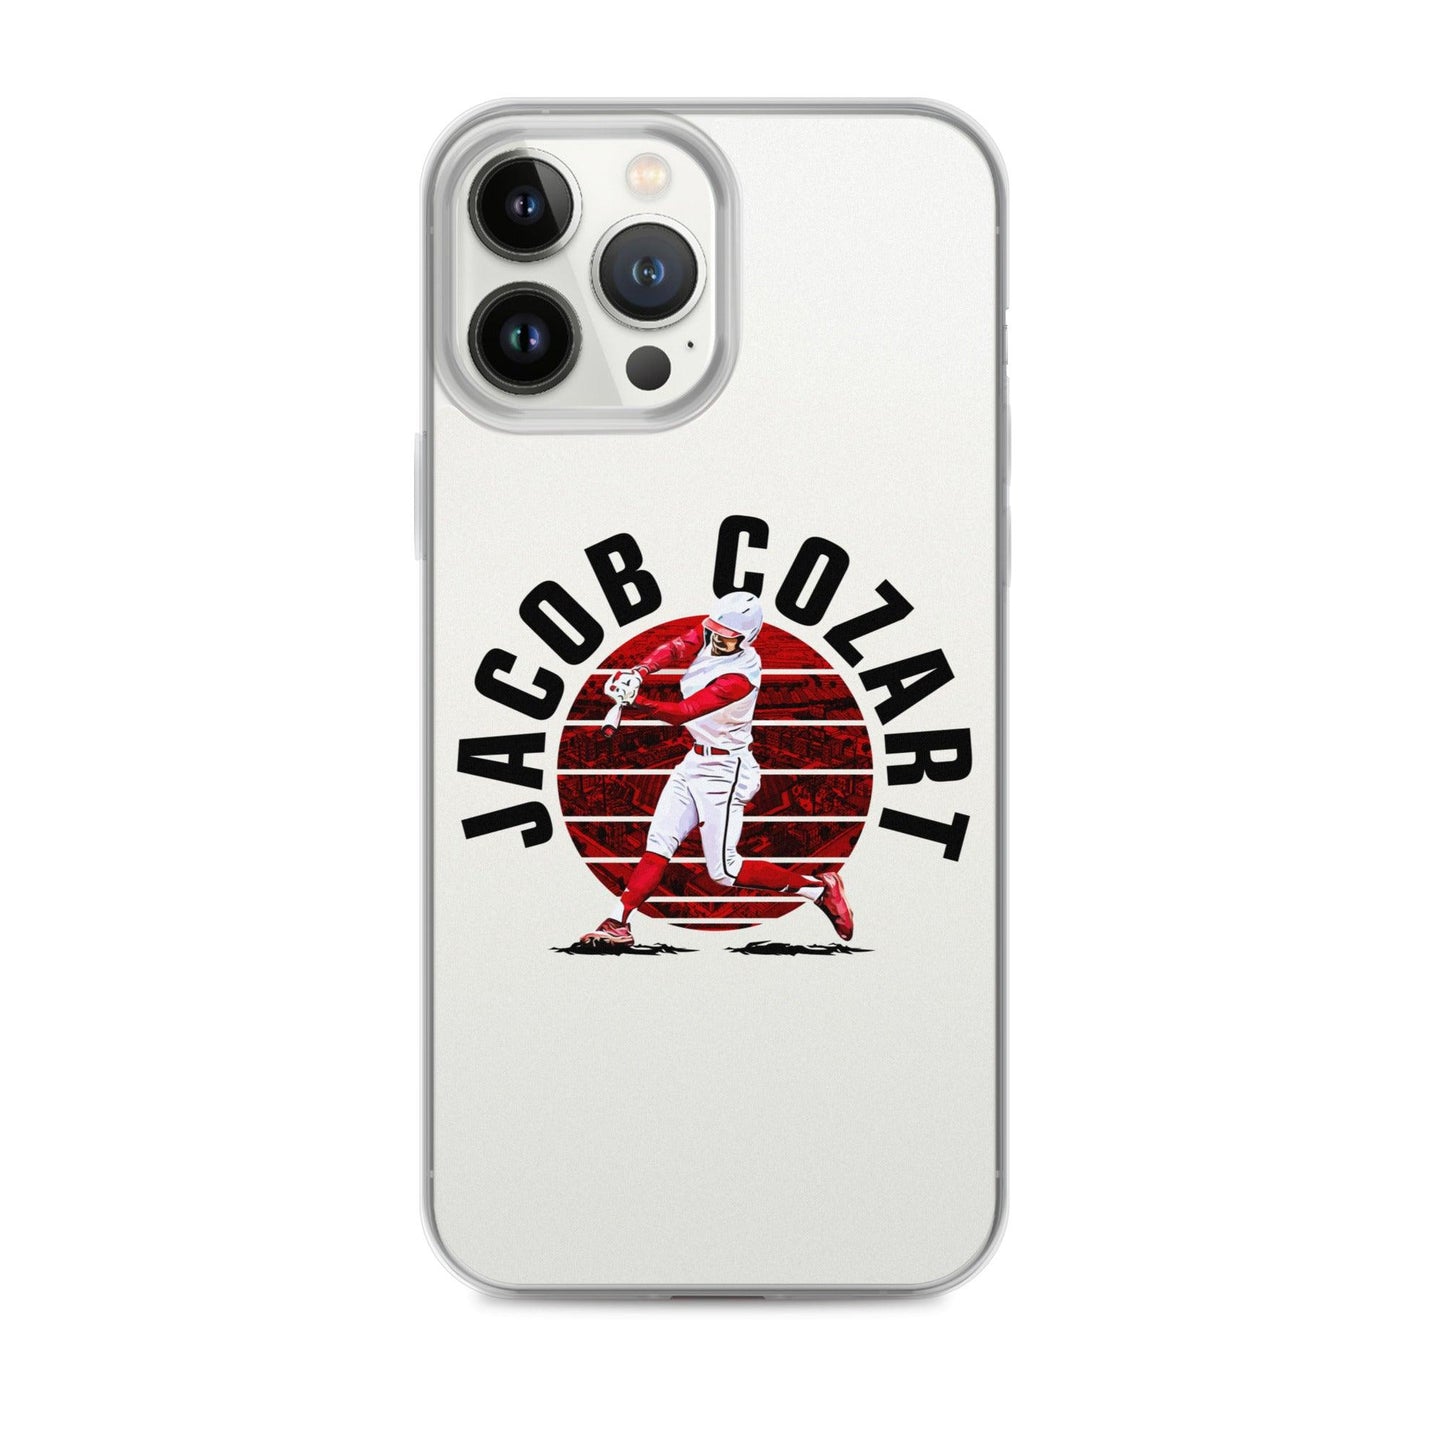 Jacob Cozart “Essential” iPhone Case - Fan Arch